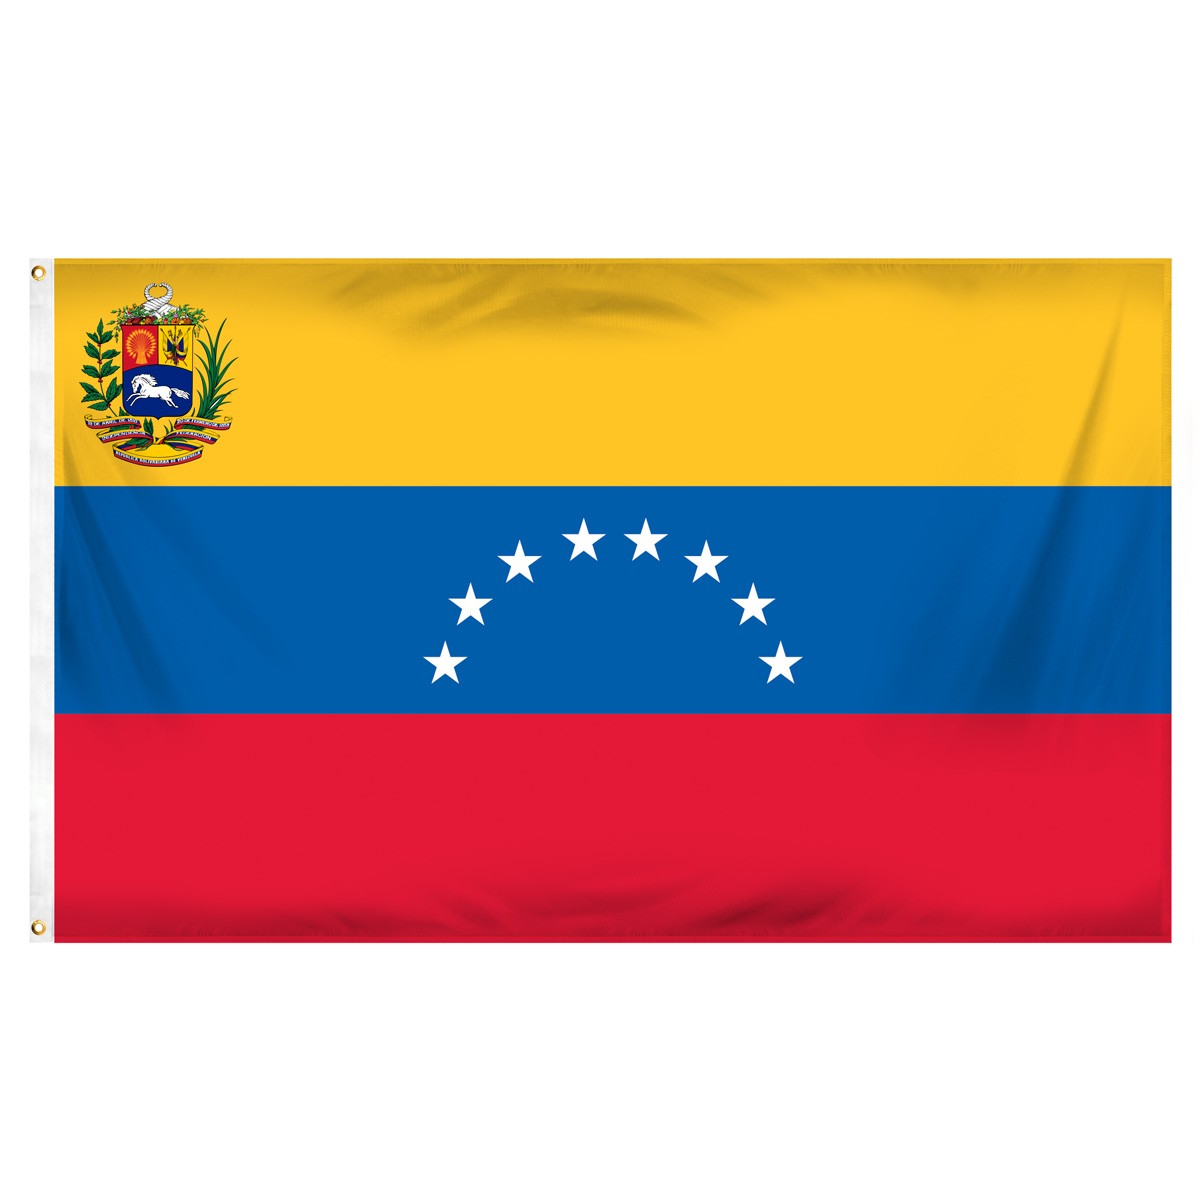 Venezuela Building Pennants and Flags